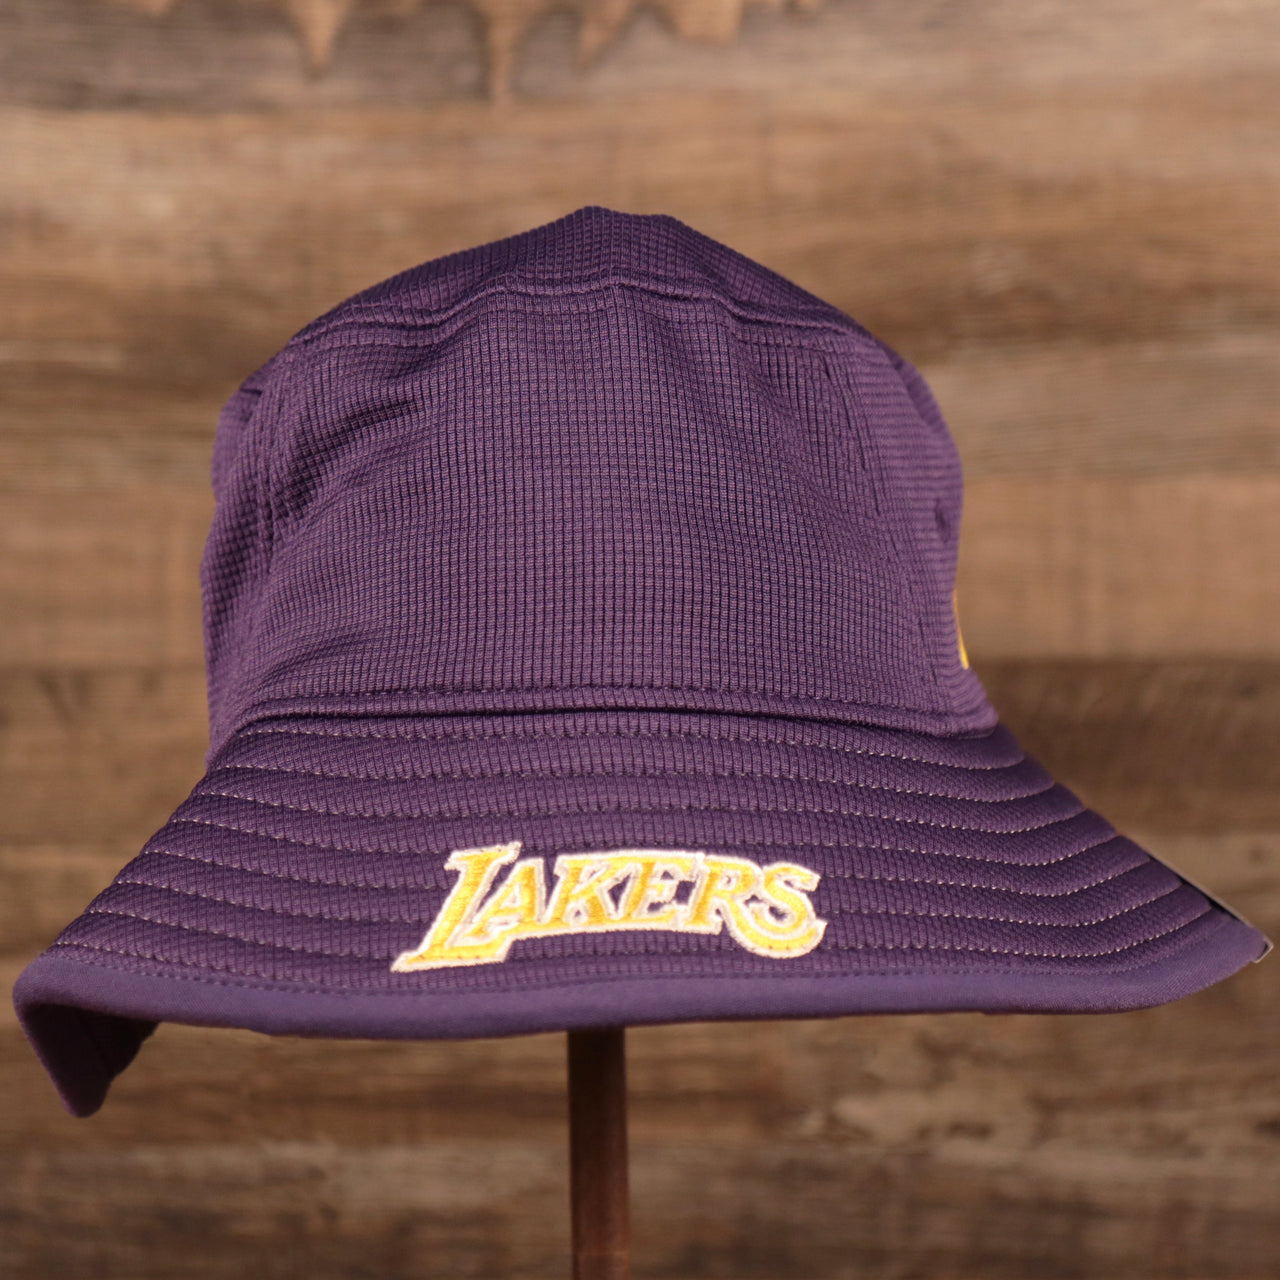 The purple Los Angeles bucket hat by New Era.